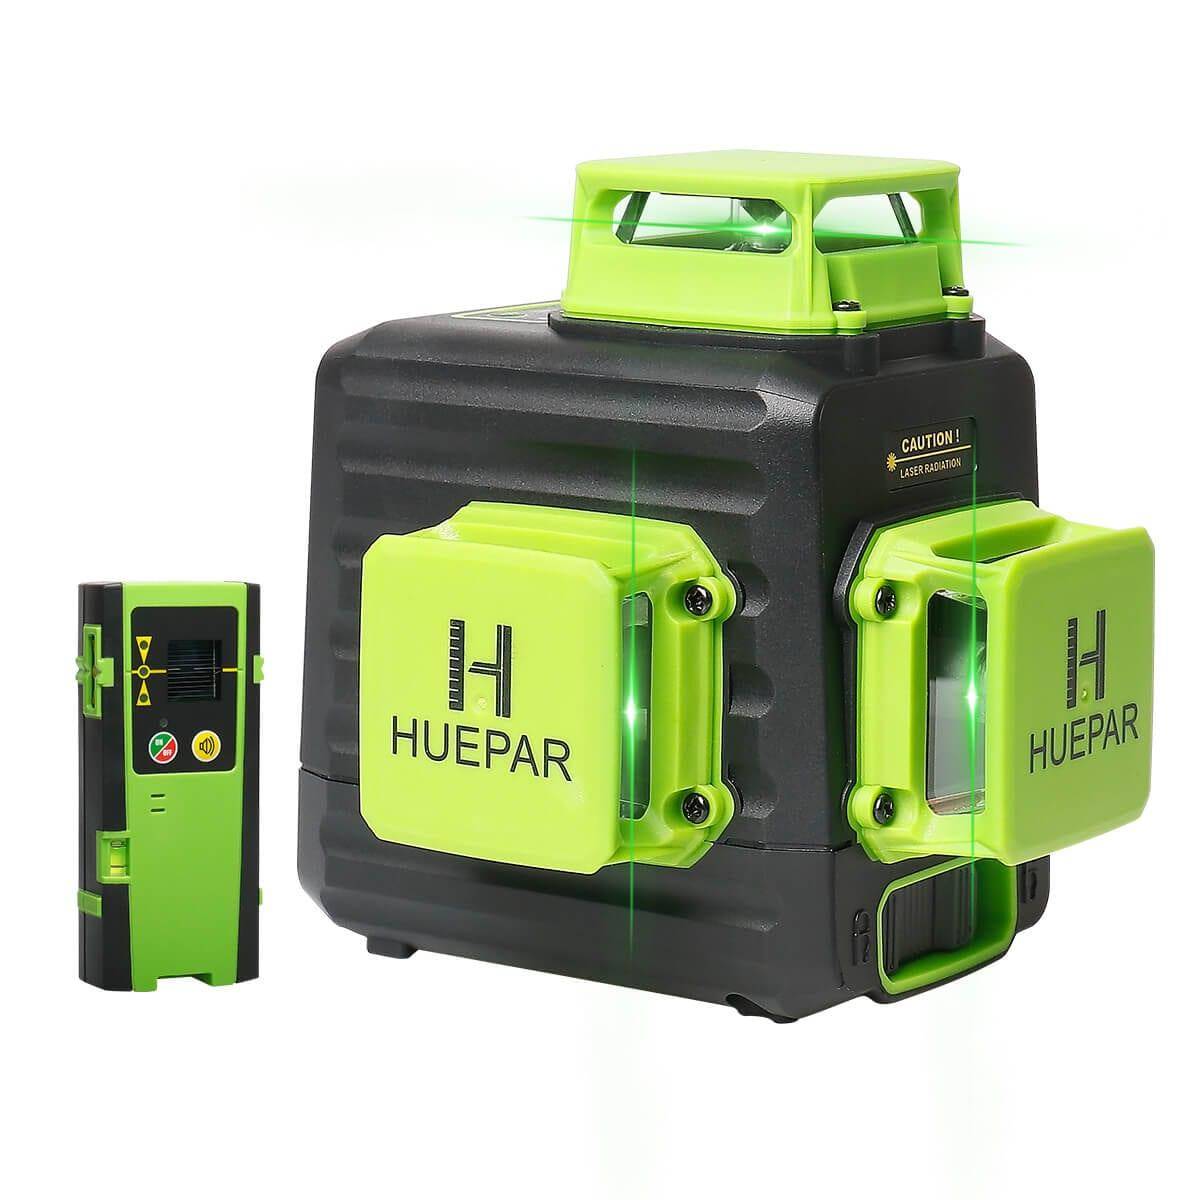 Huepar B03CG Pro - 3 x 360° Green Beam Cross Line Self-leveling Laser Level with Hard Carry Case - HUEPAR UK